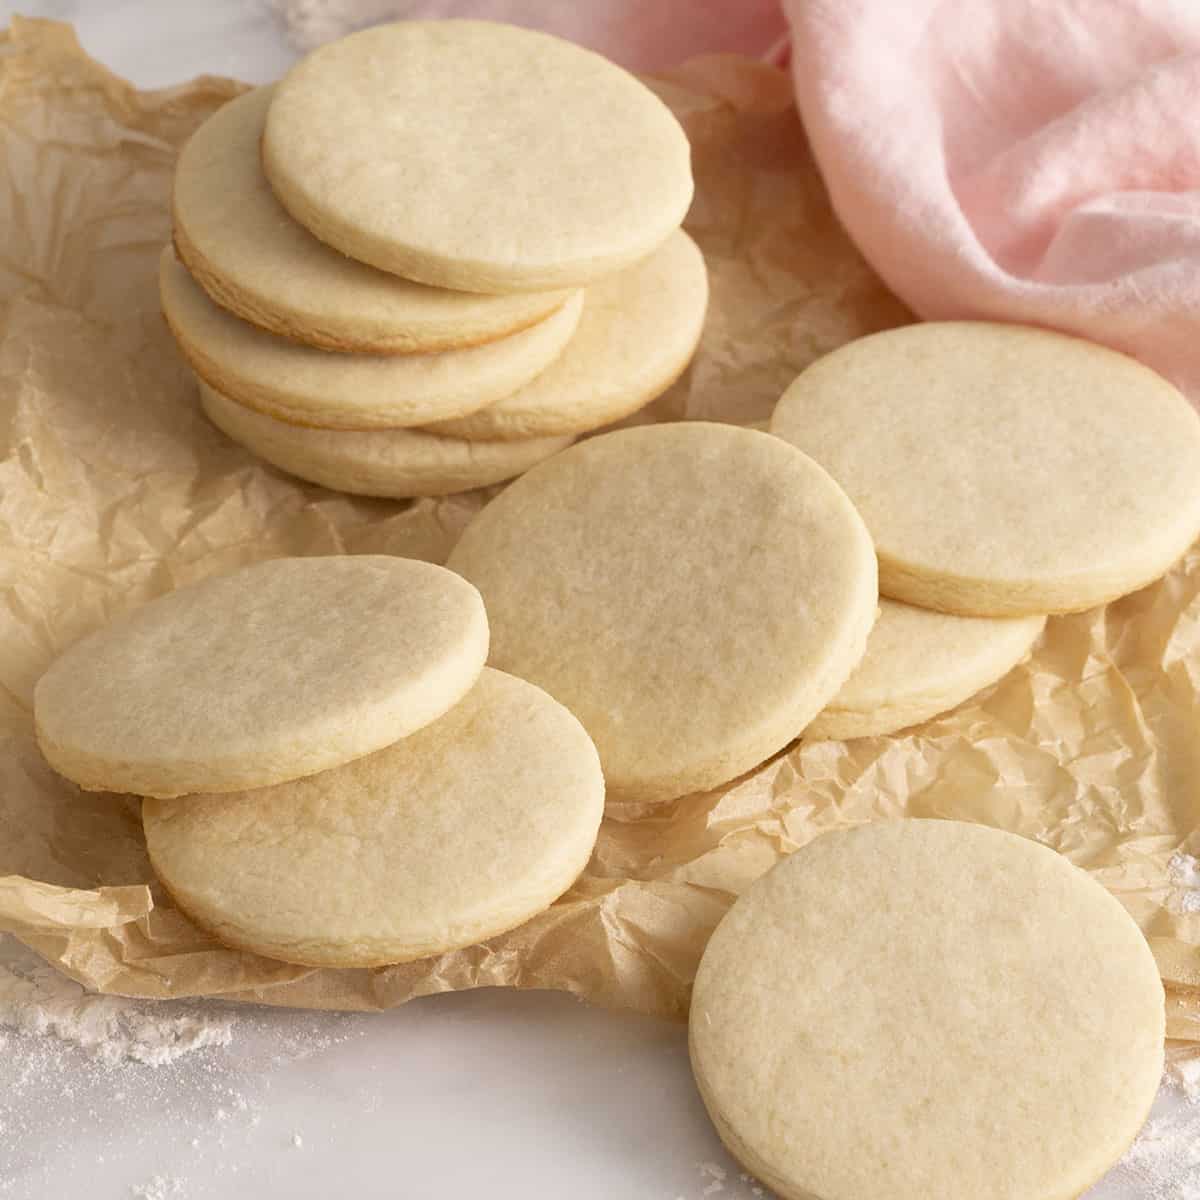 https://preppykitchen.com/wp-content/uploads/2020/12/Sugar-cookies-recipe-1200.jpg